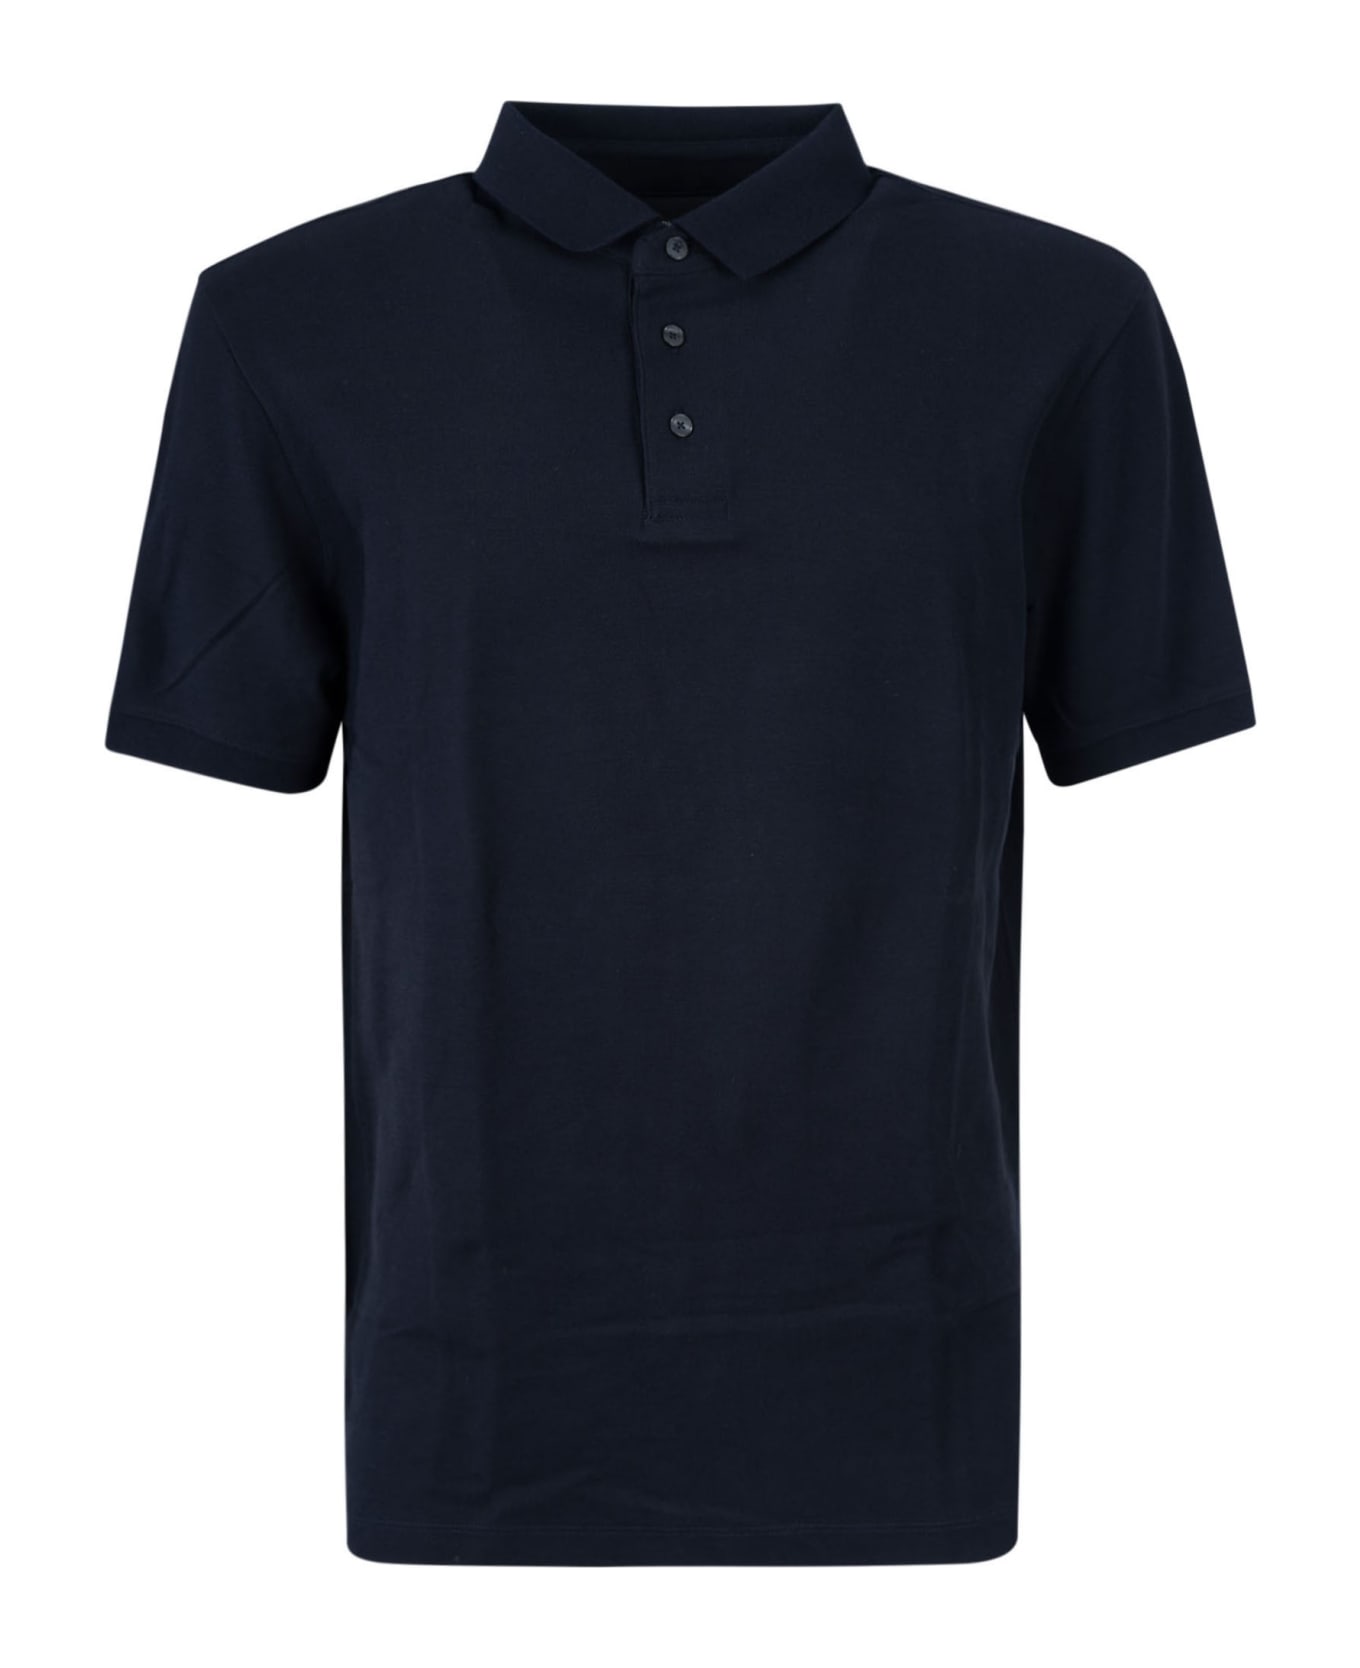 Emporio Armani Buttoned Polo Shirt - Stend Navy